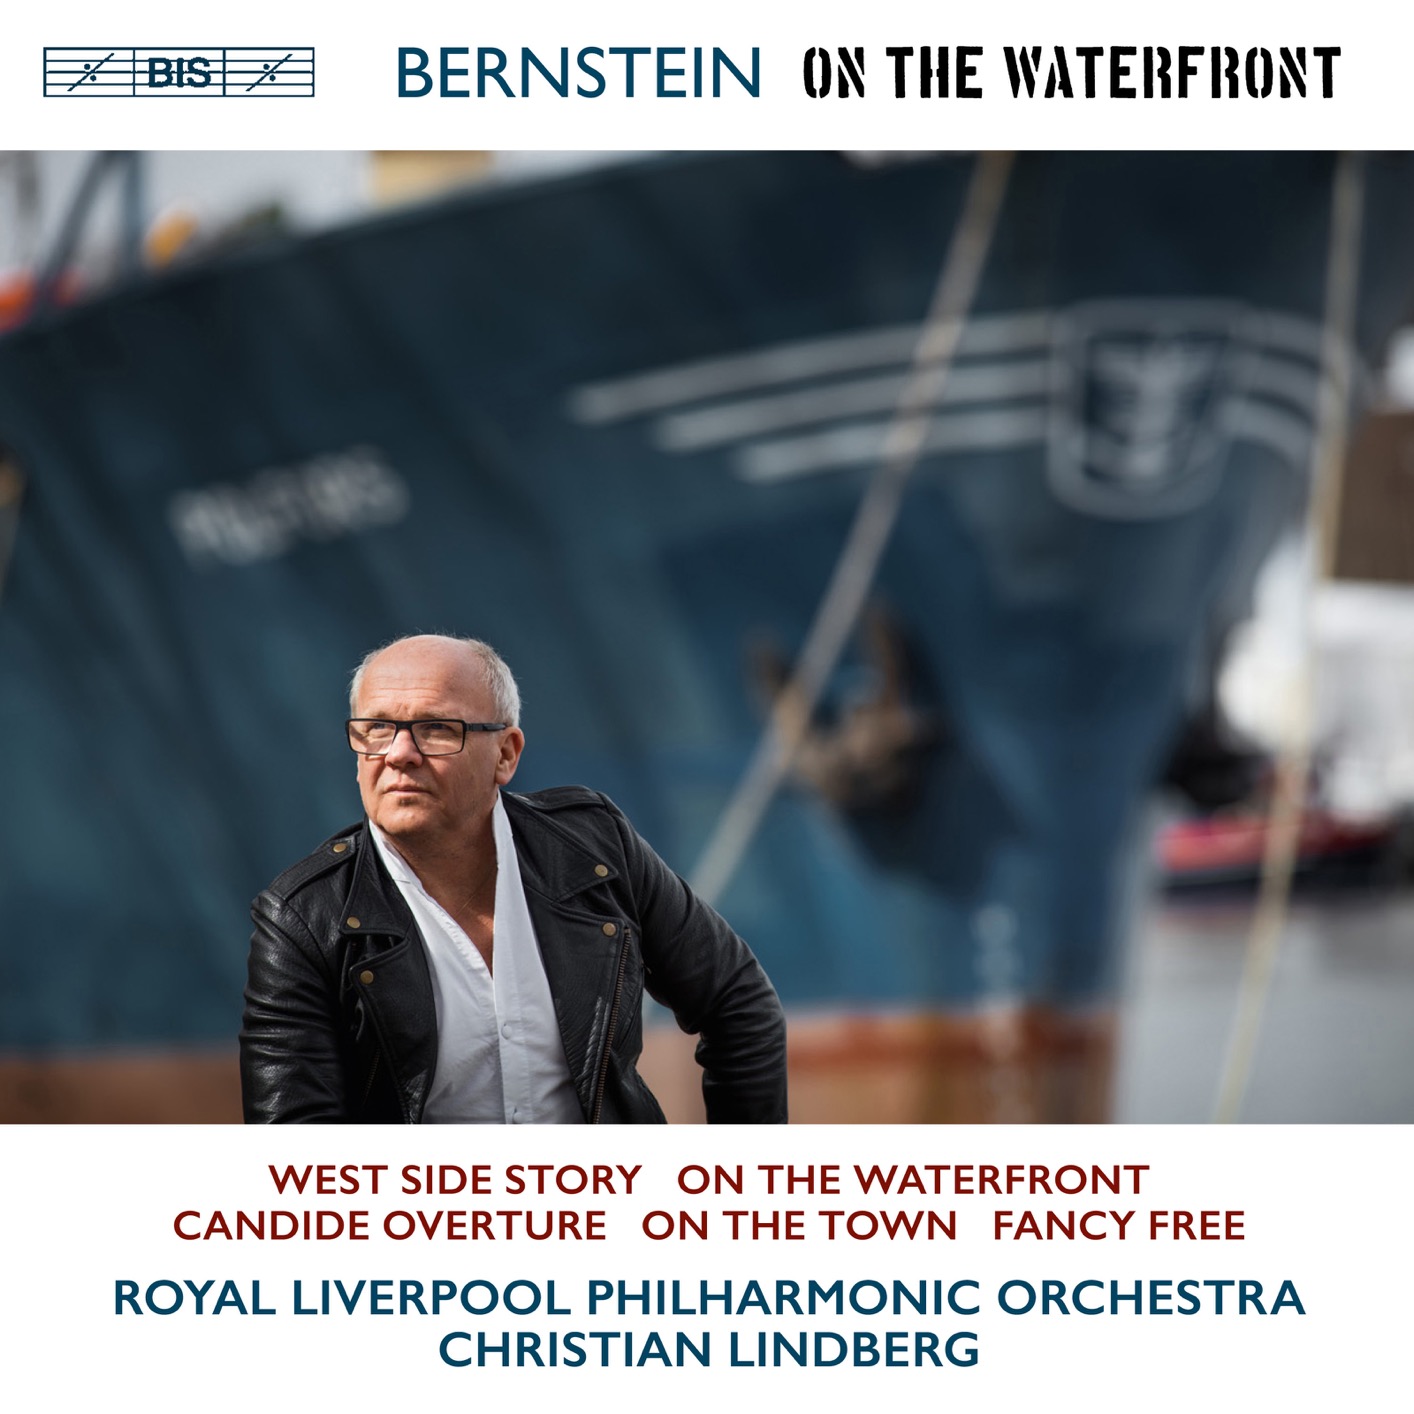 Royal Liverpool Philharmonic Orchestra & Christian Lindberg - Bernstein On the Waterfront (2018) [FLAC 24bit/96kHz]